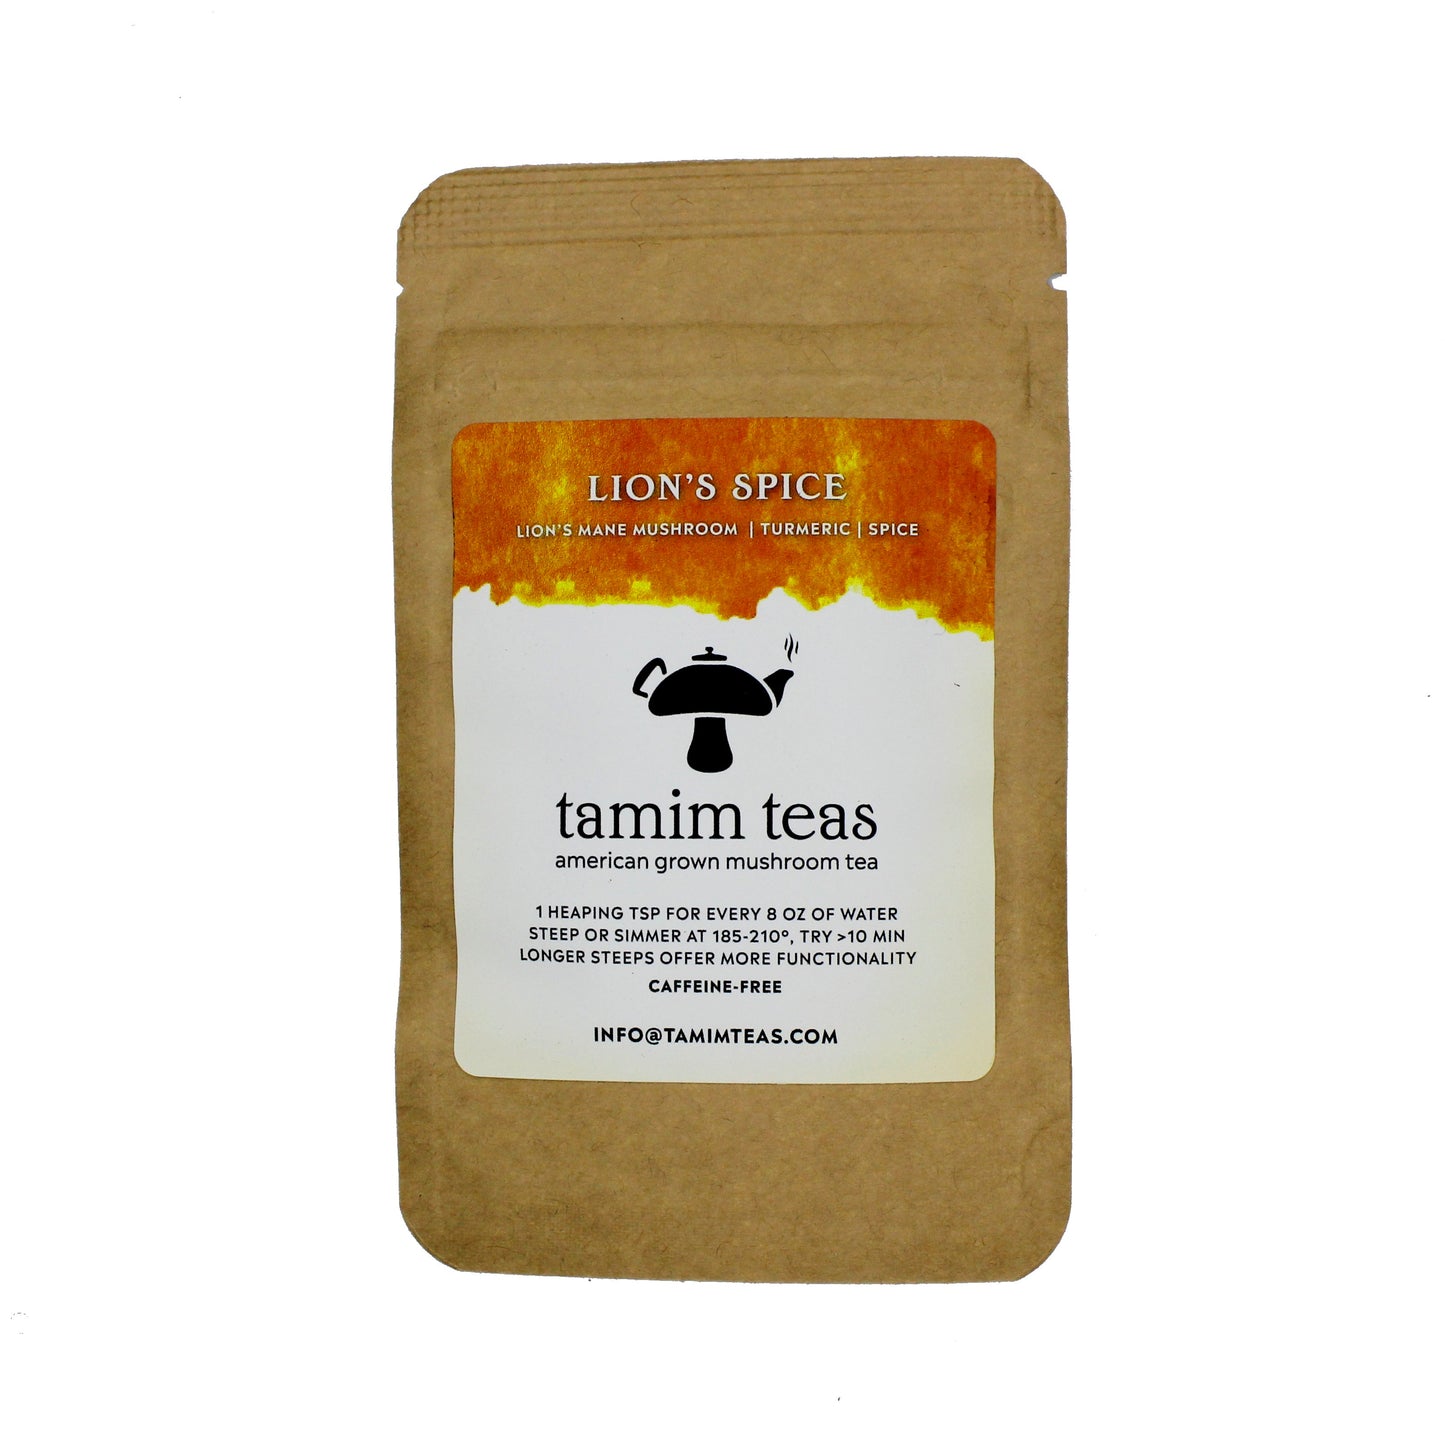 Lion's Spice | Lion's Mane Tea with Turmeric and Spice by Tamim Teas